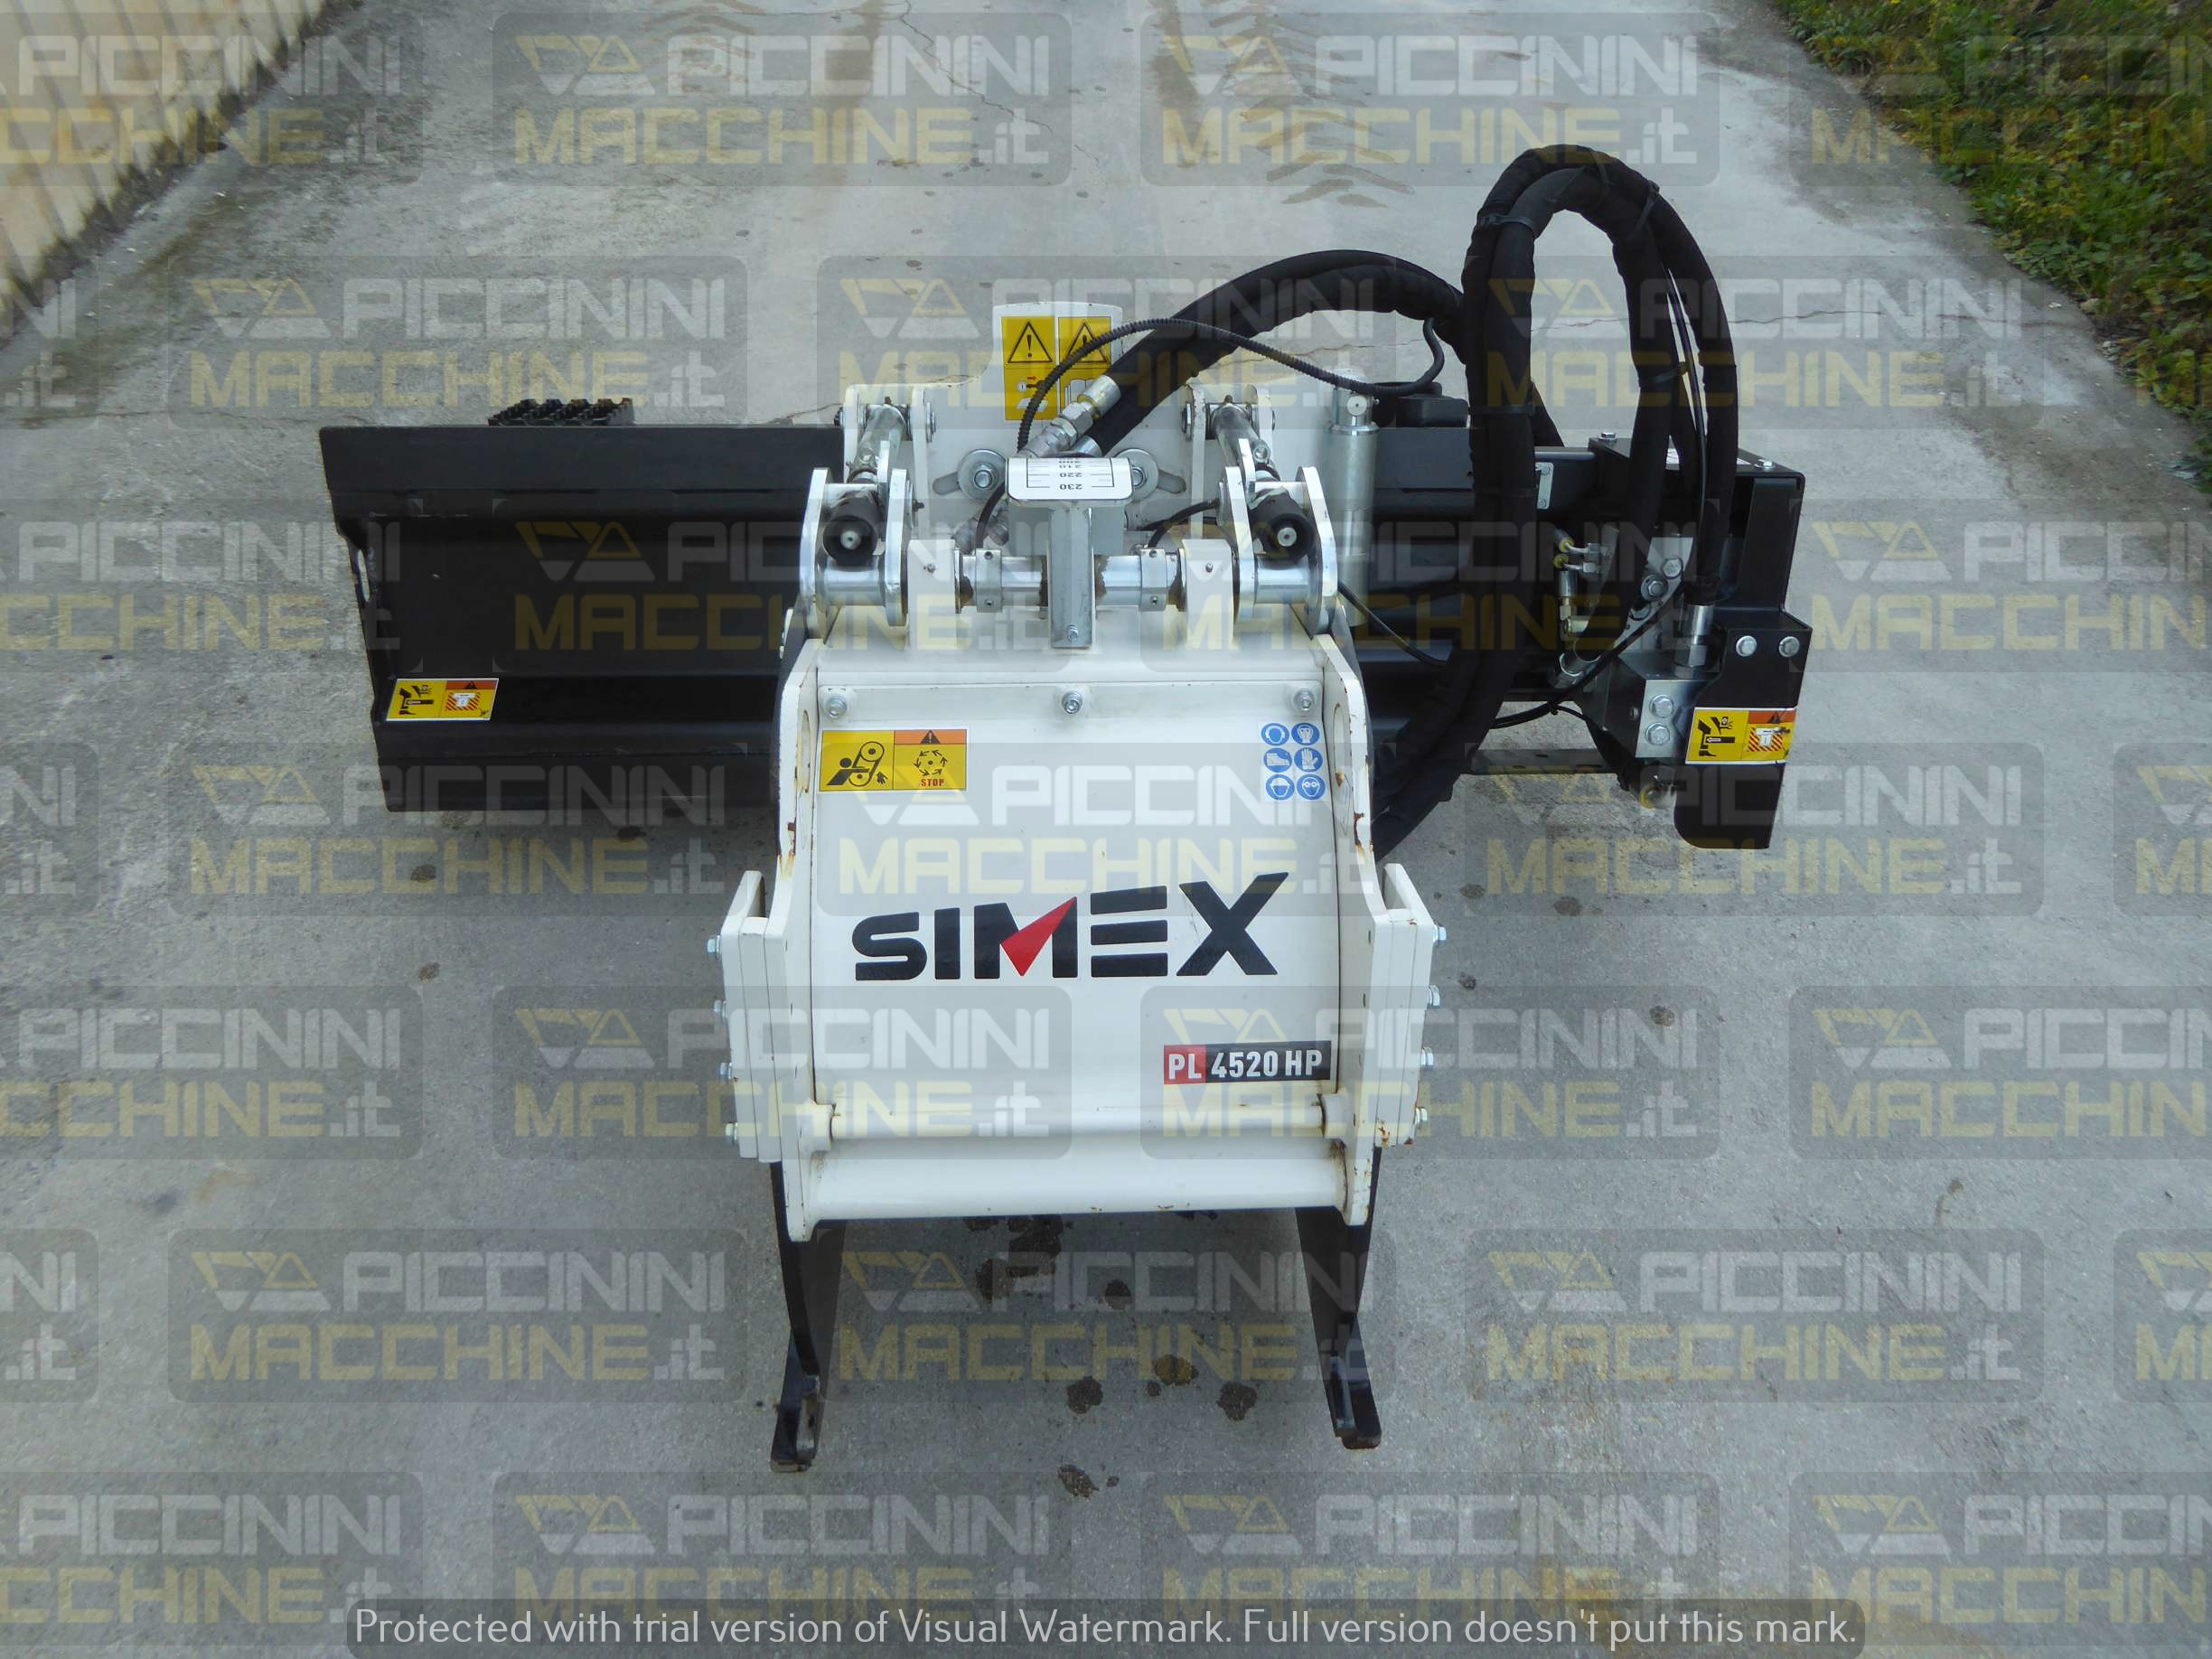 Fresa stradale Simex PL 45.20 HP in vendita - foto 1